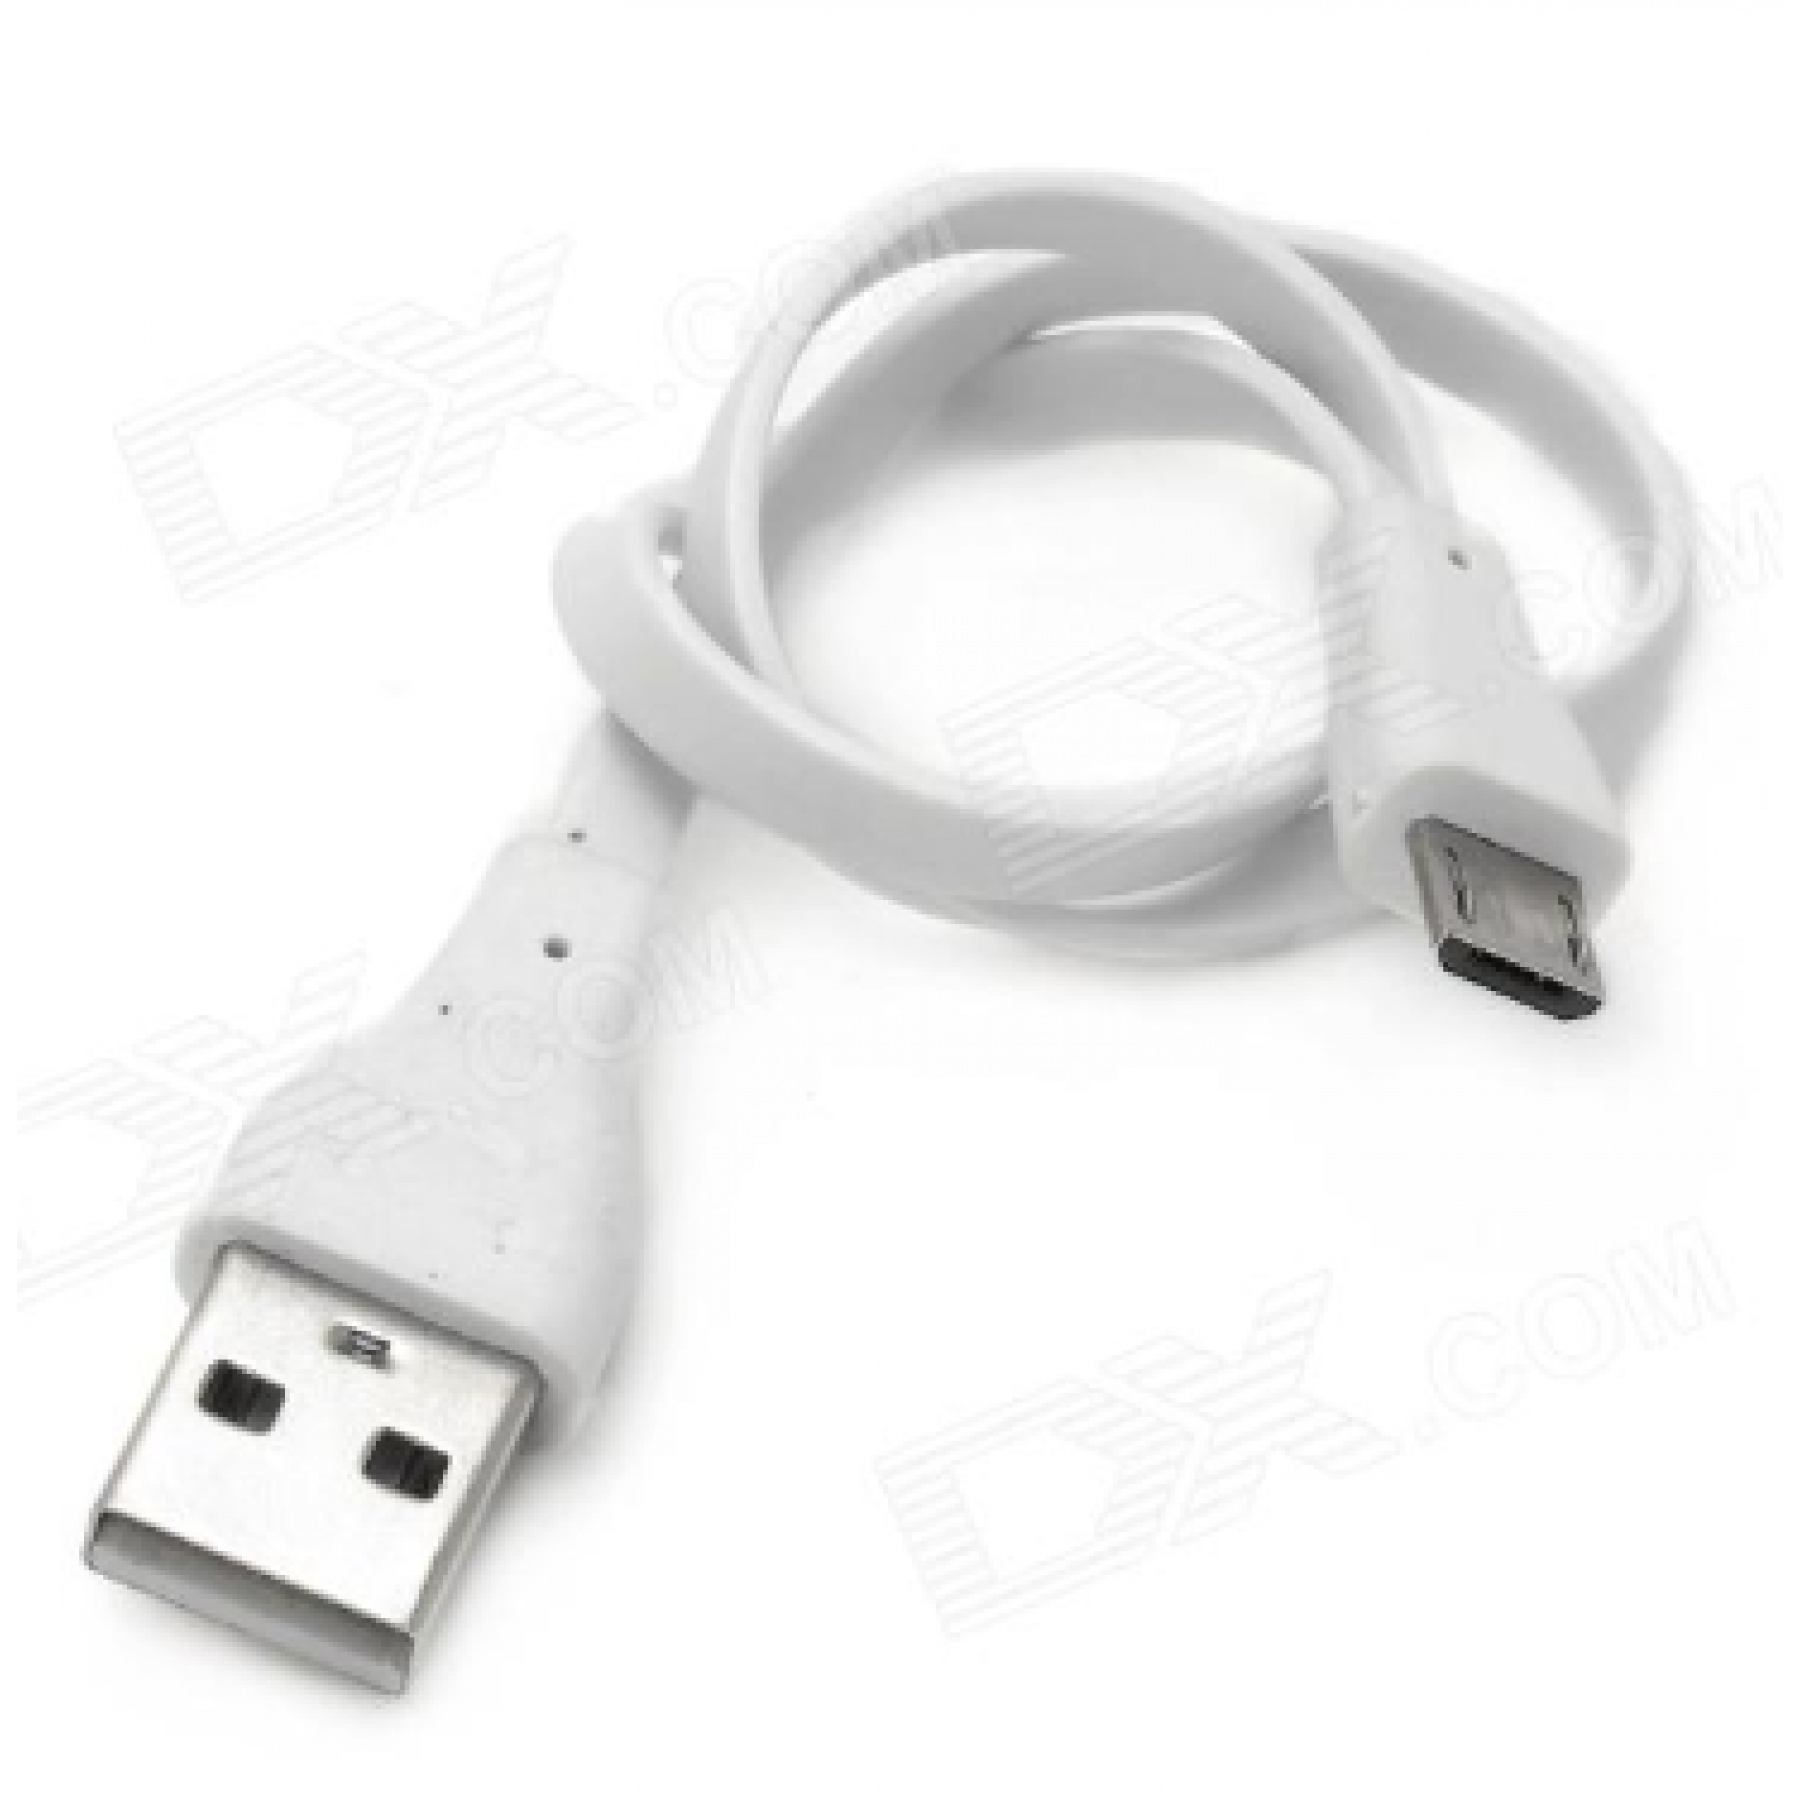 Verloopkabel USB 2.0 male > USB micro male